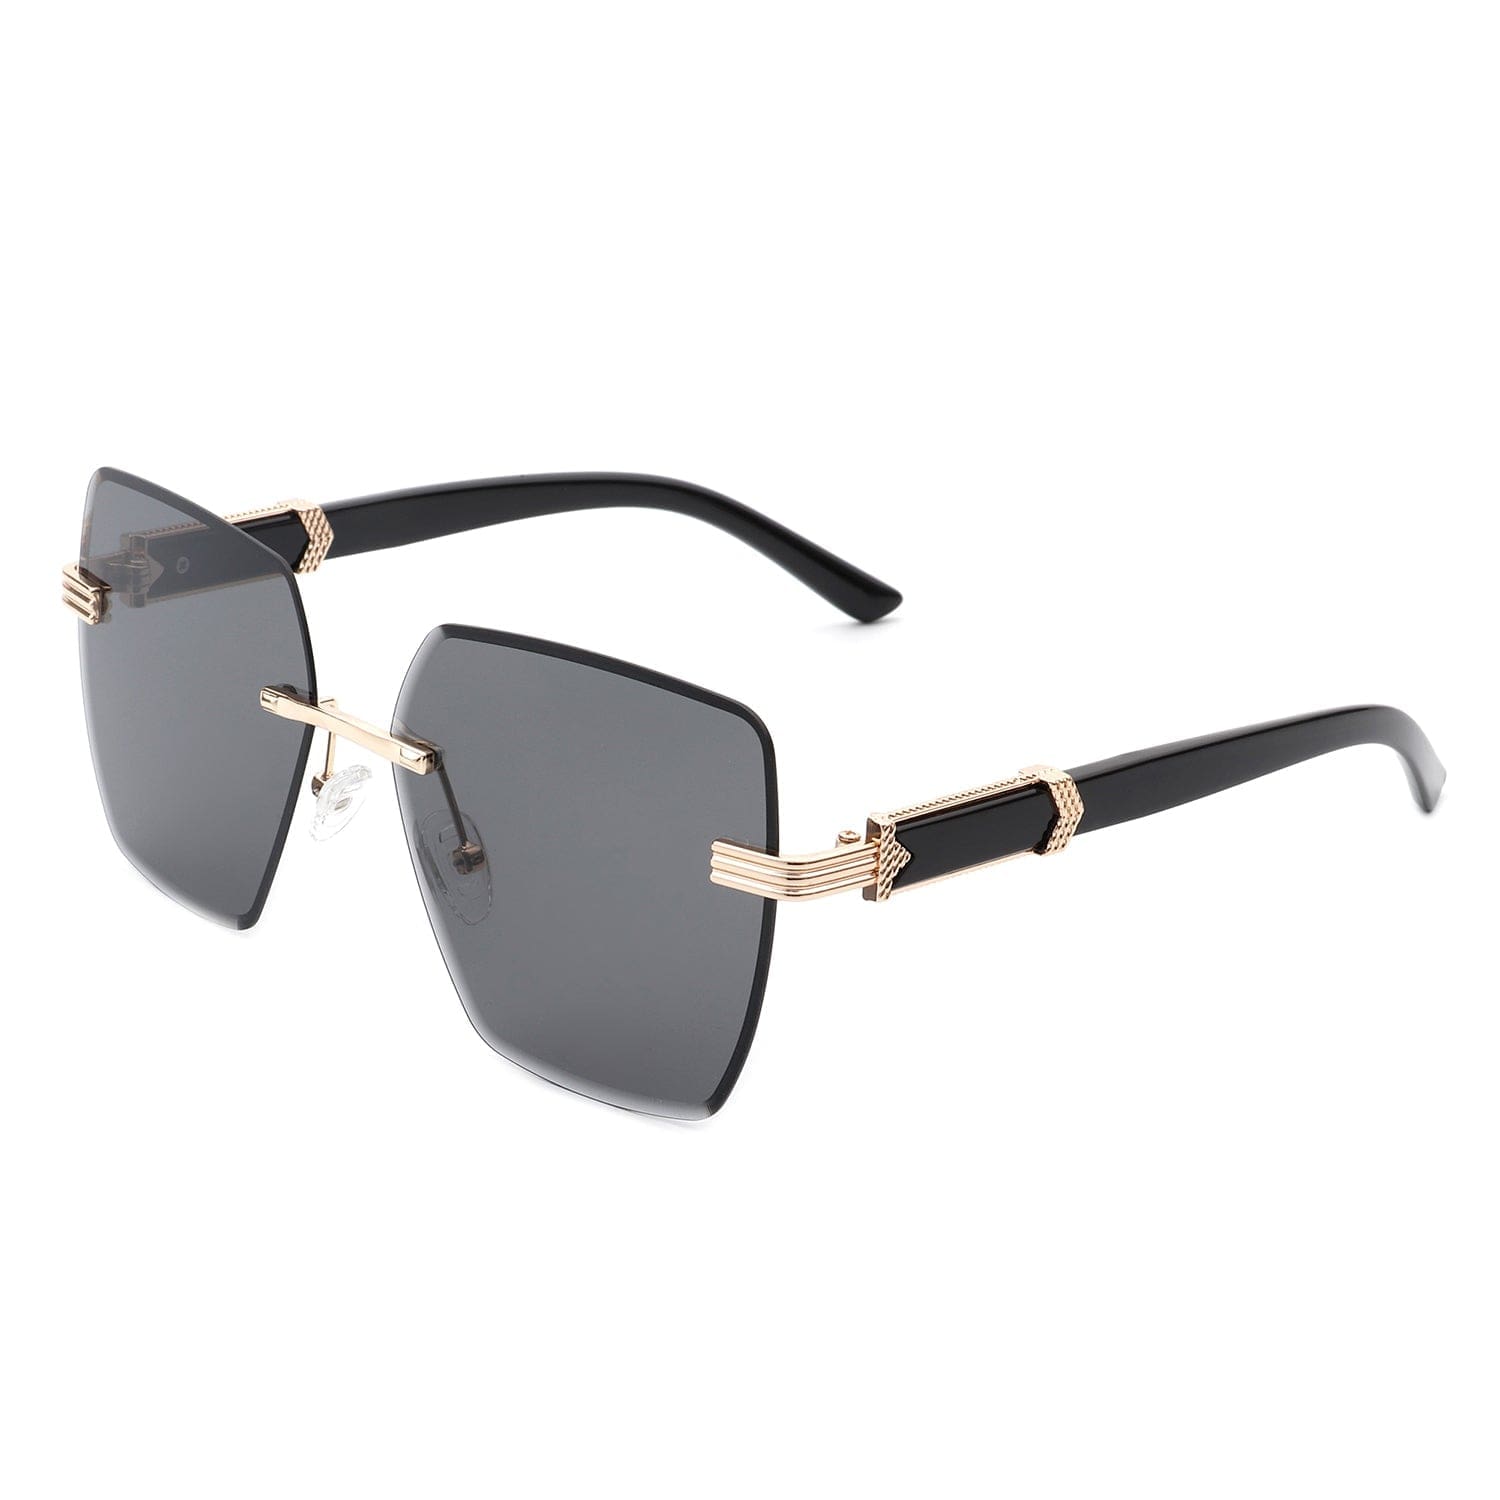 Glimmery - Oversized Rimless Square Sunglasses 7